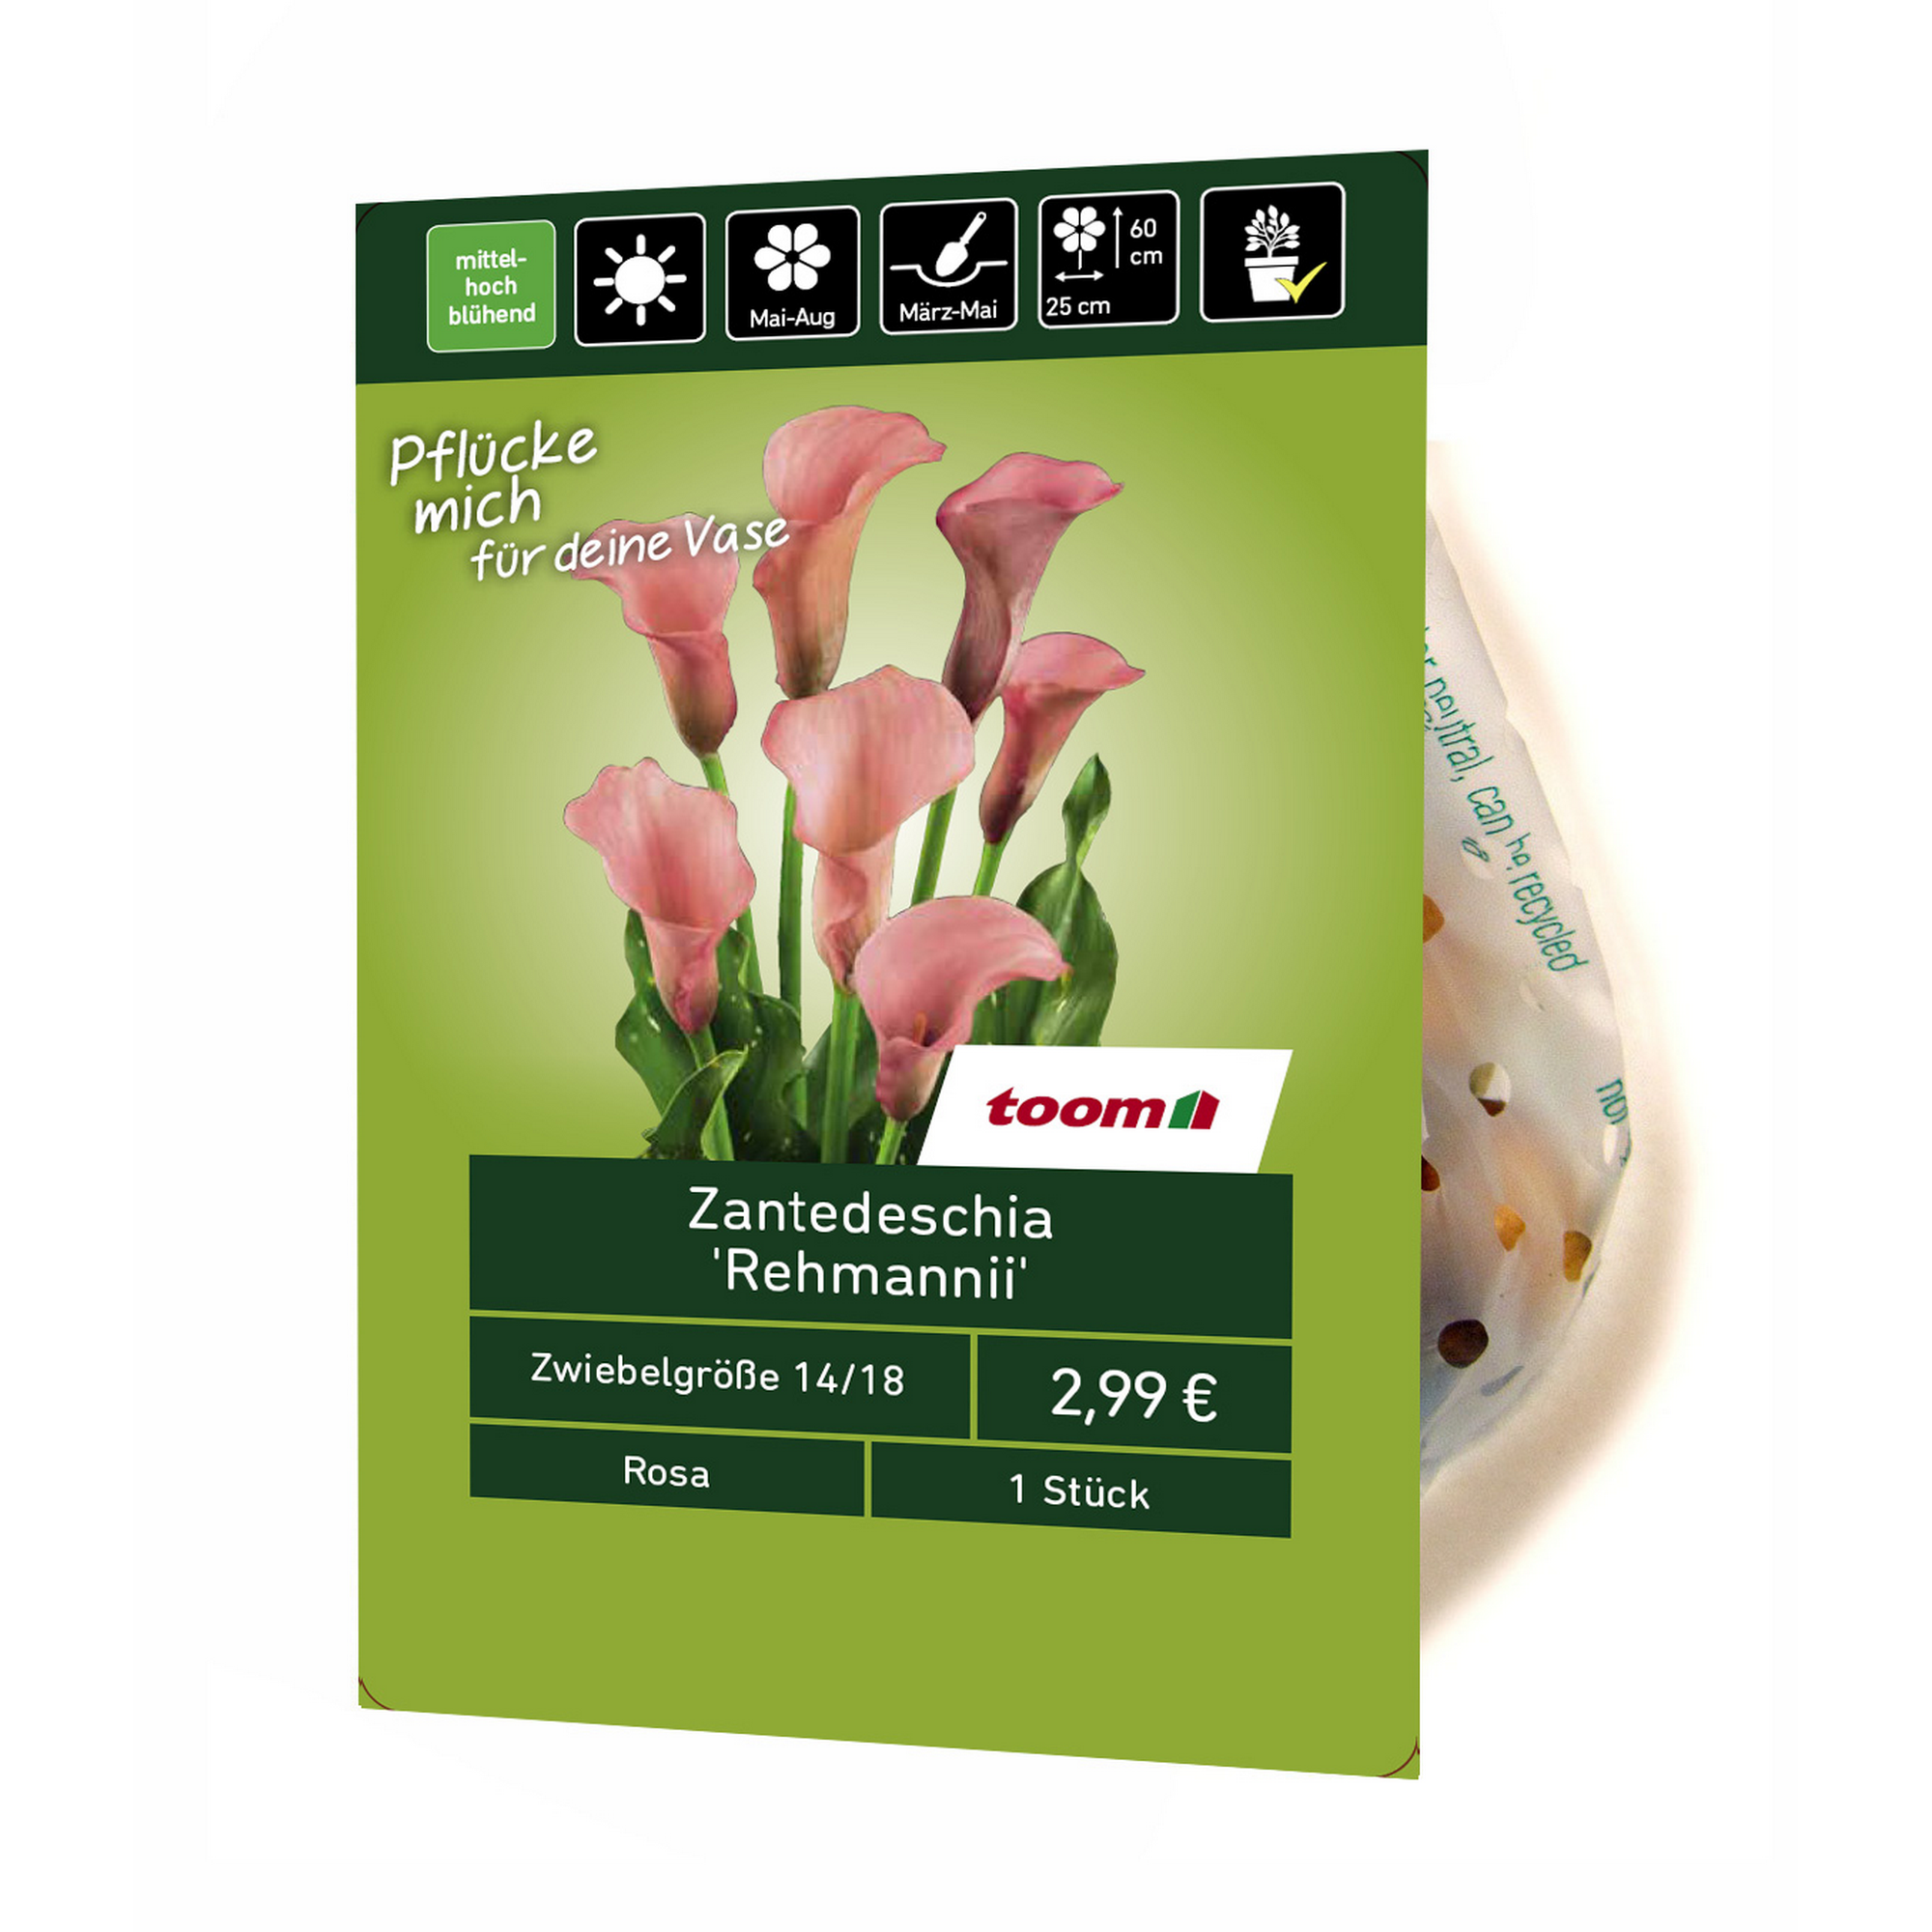 Zantedeschia 'Rehmanii' 1 Stück + product picture